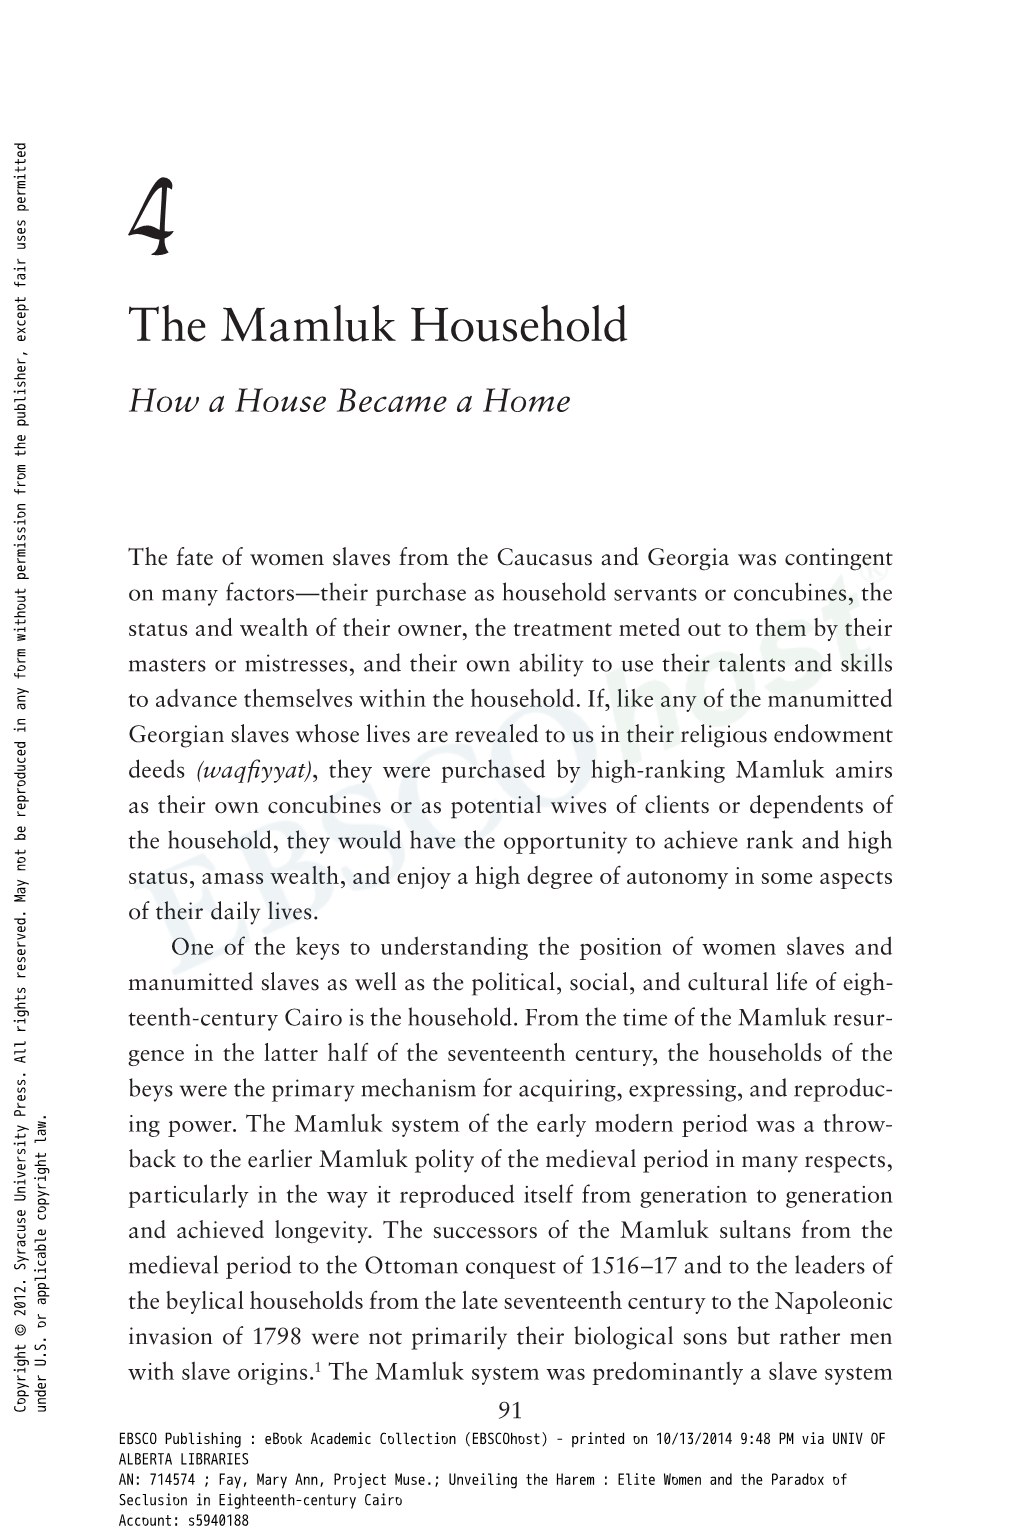 The Mamluk Household